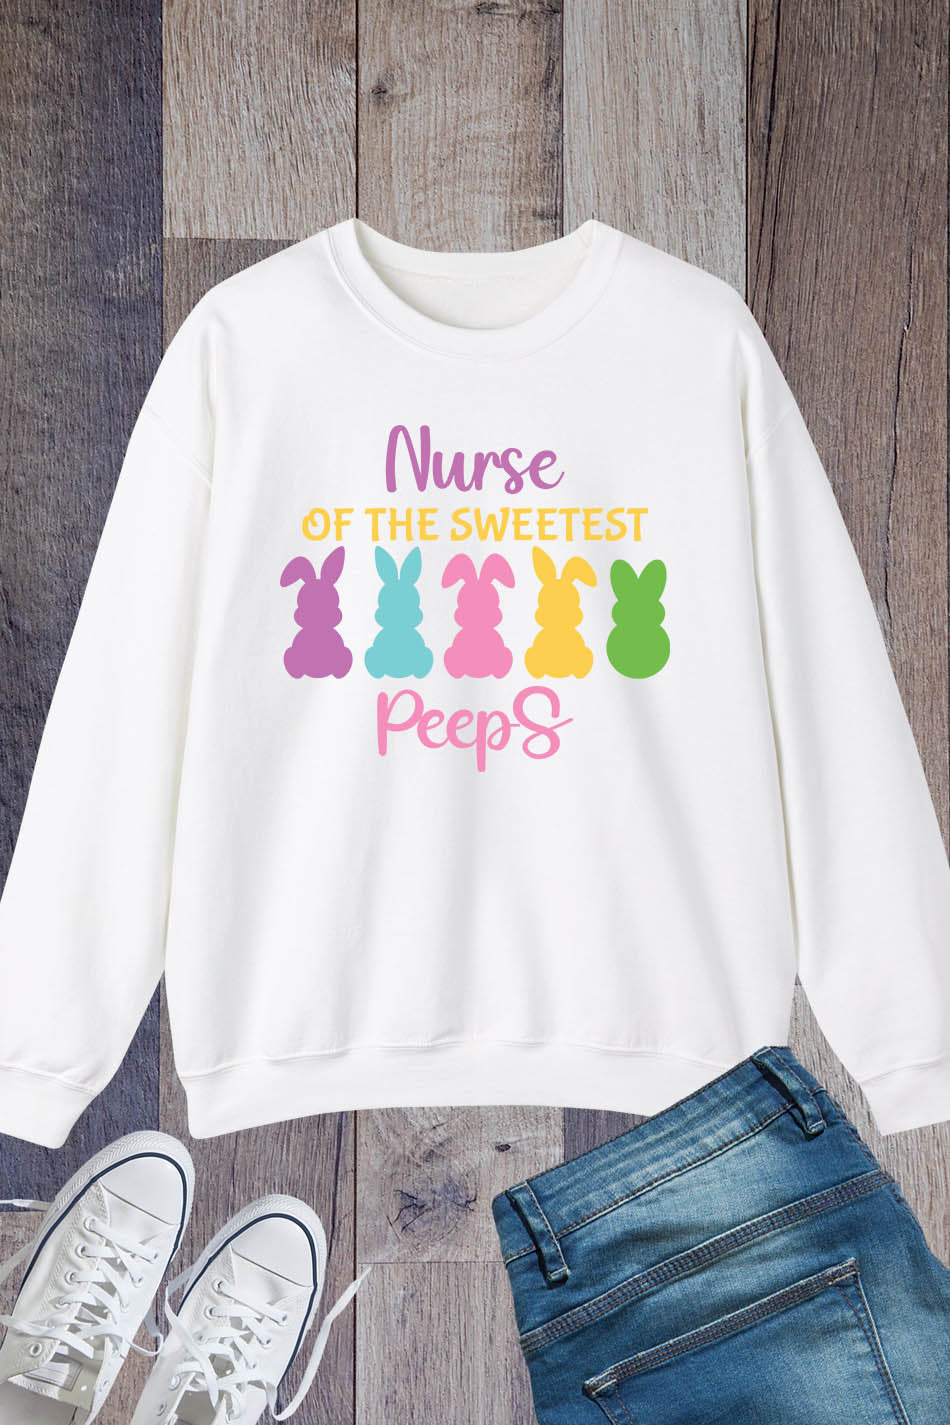 Nurse of the Sweetest Peeps Sweatshirt